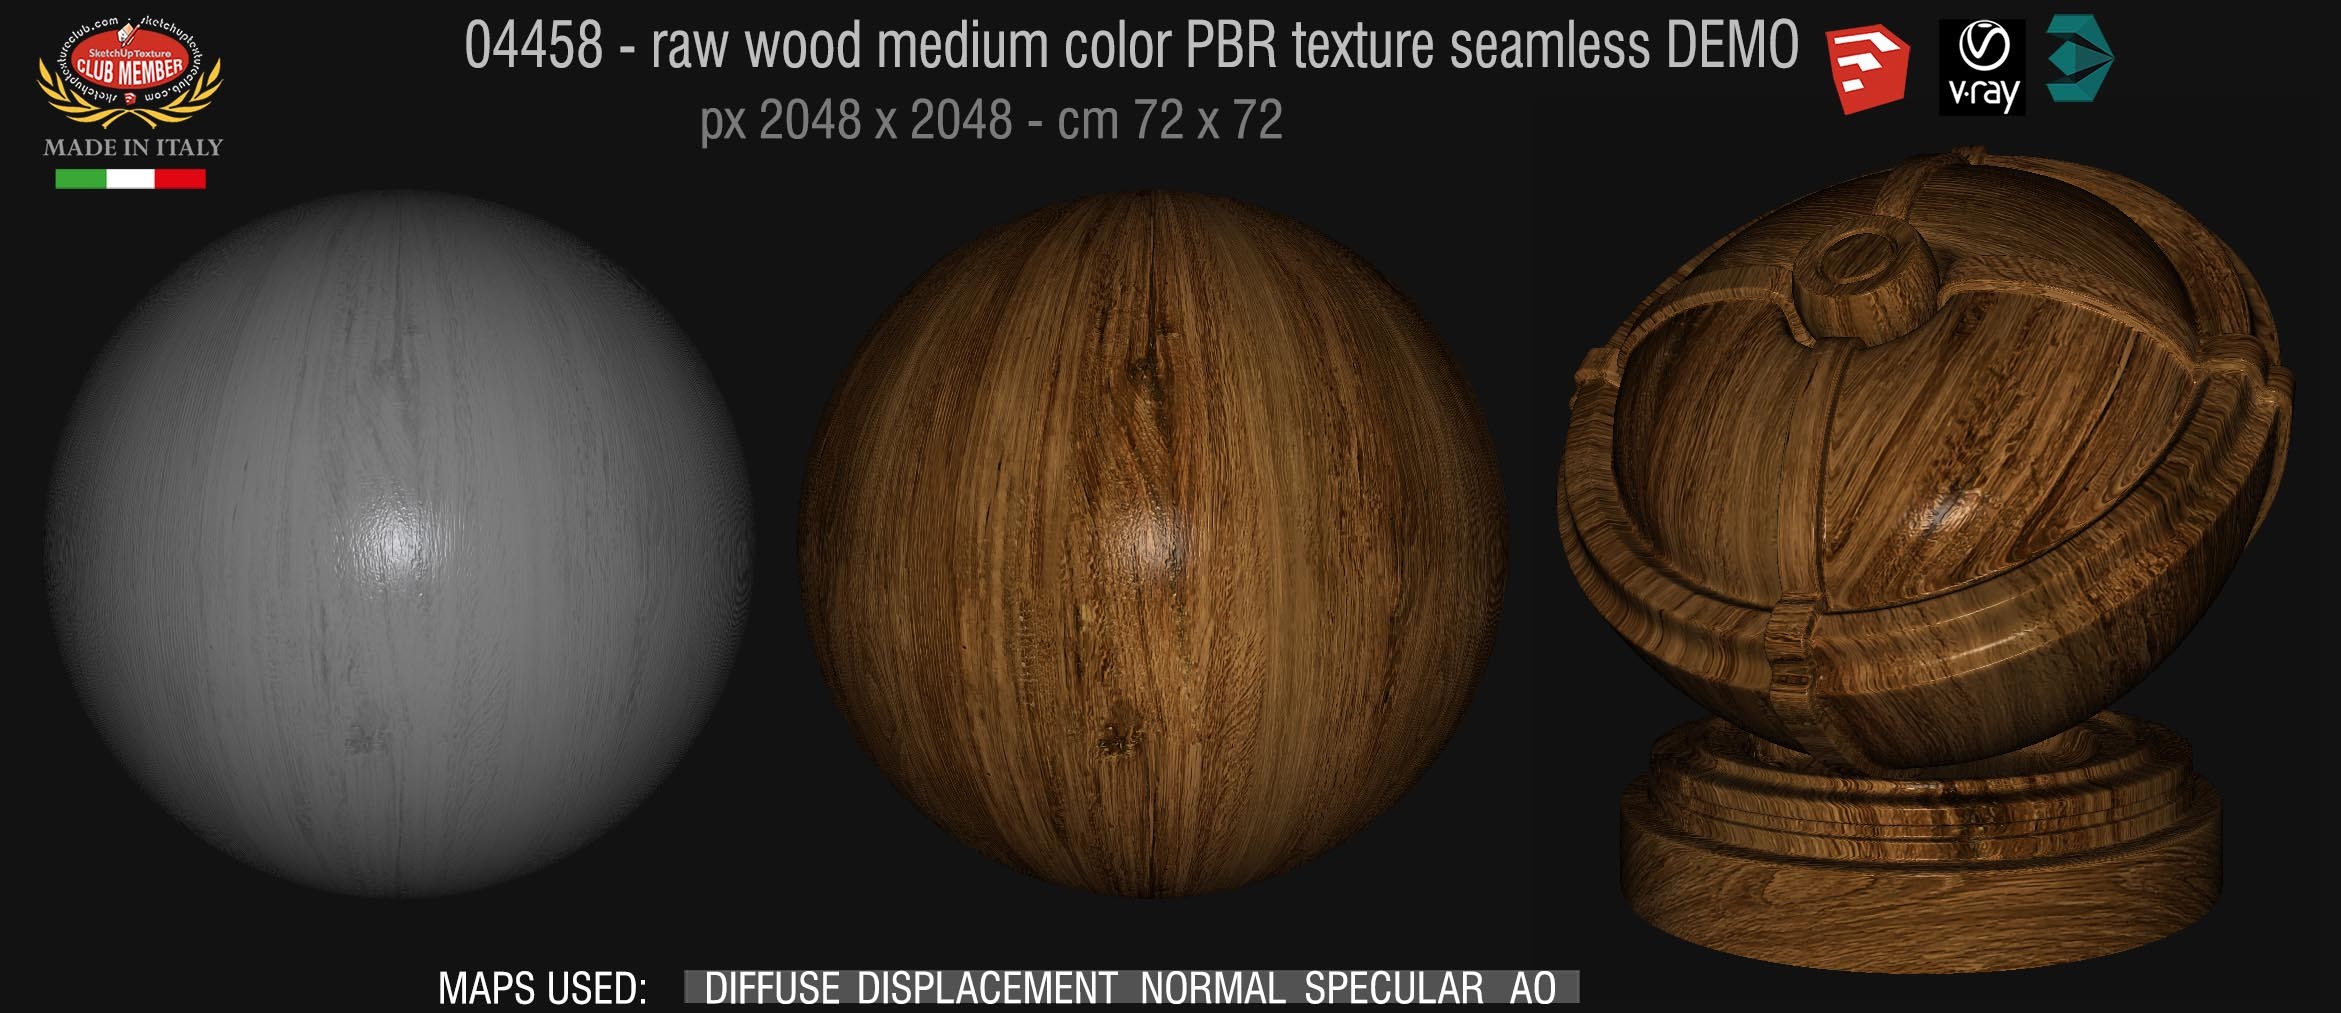 04458 aw wood medium color PBR texture seamless DEMO